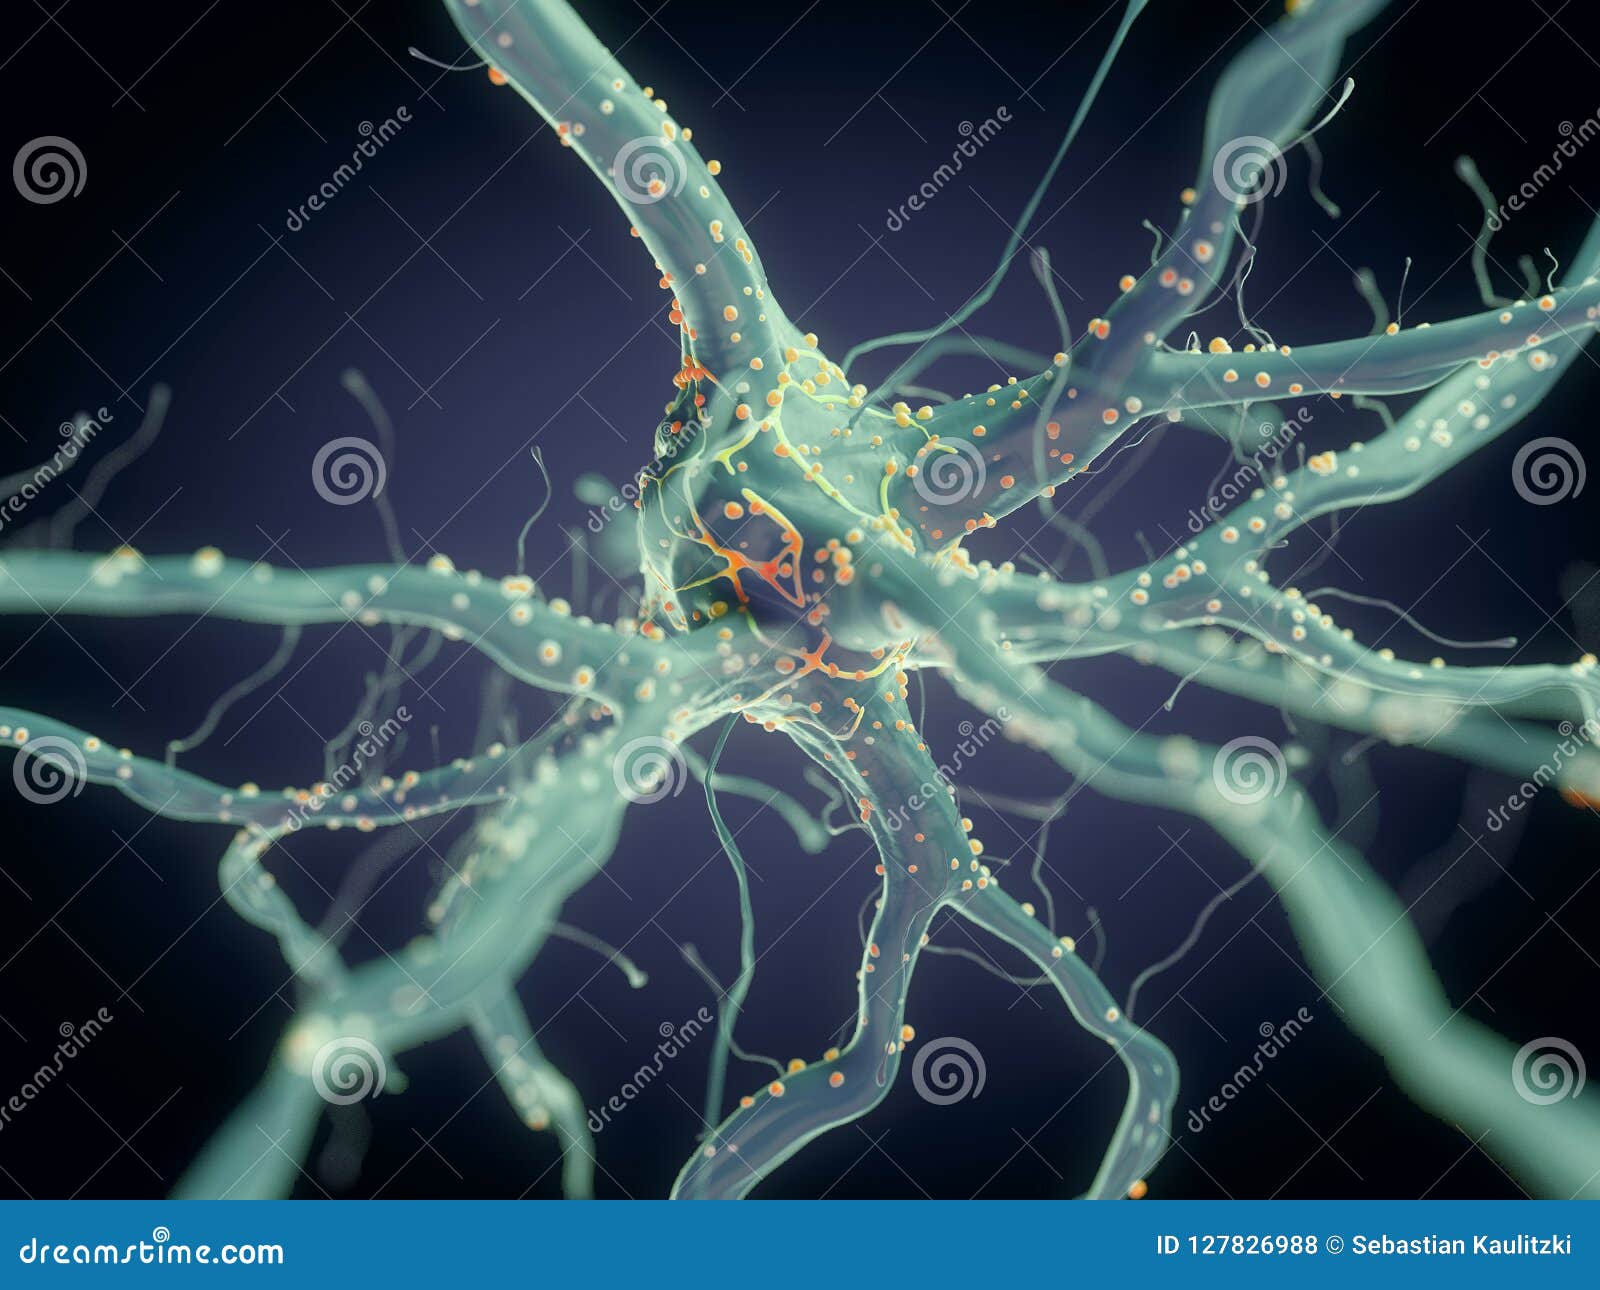 A nerve cell stock illustration. Illustration of receptor - 127826988